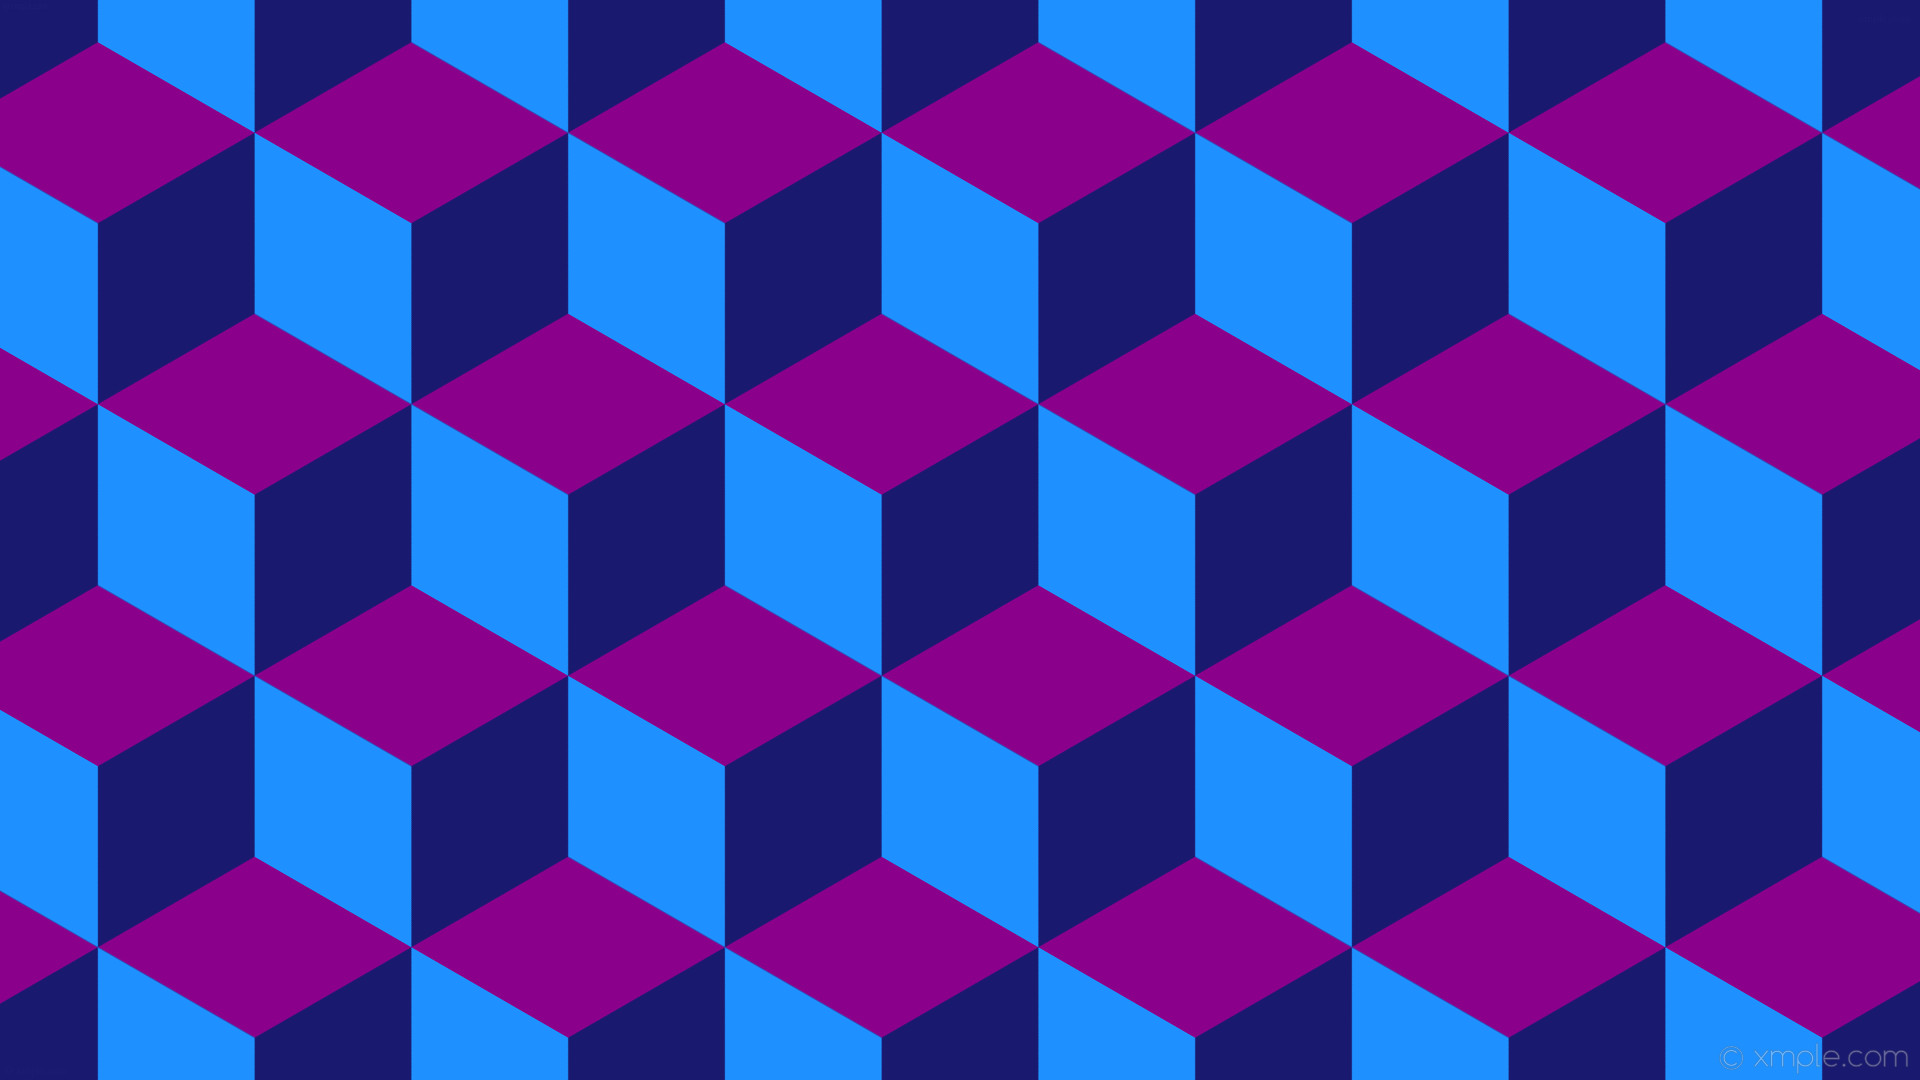 1920x1080 wallpaper blue 3d cubes purple midnight blue dark magenta dodger blue  #191970 #8b008b #